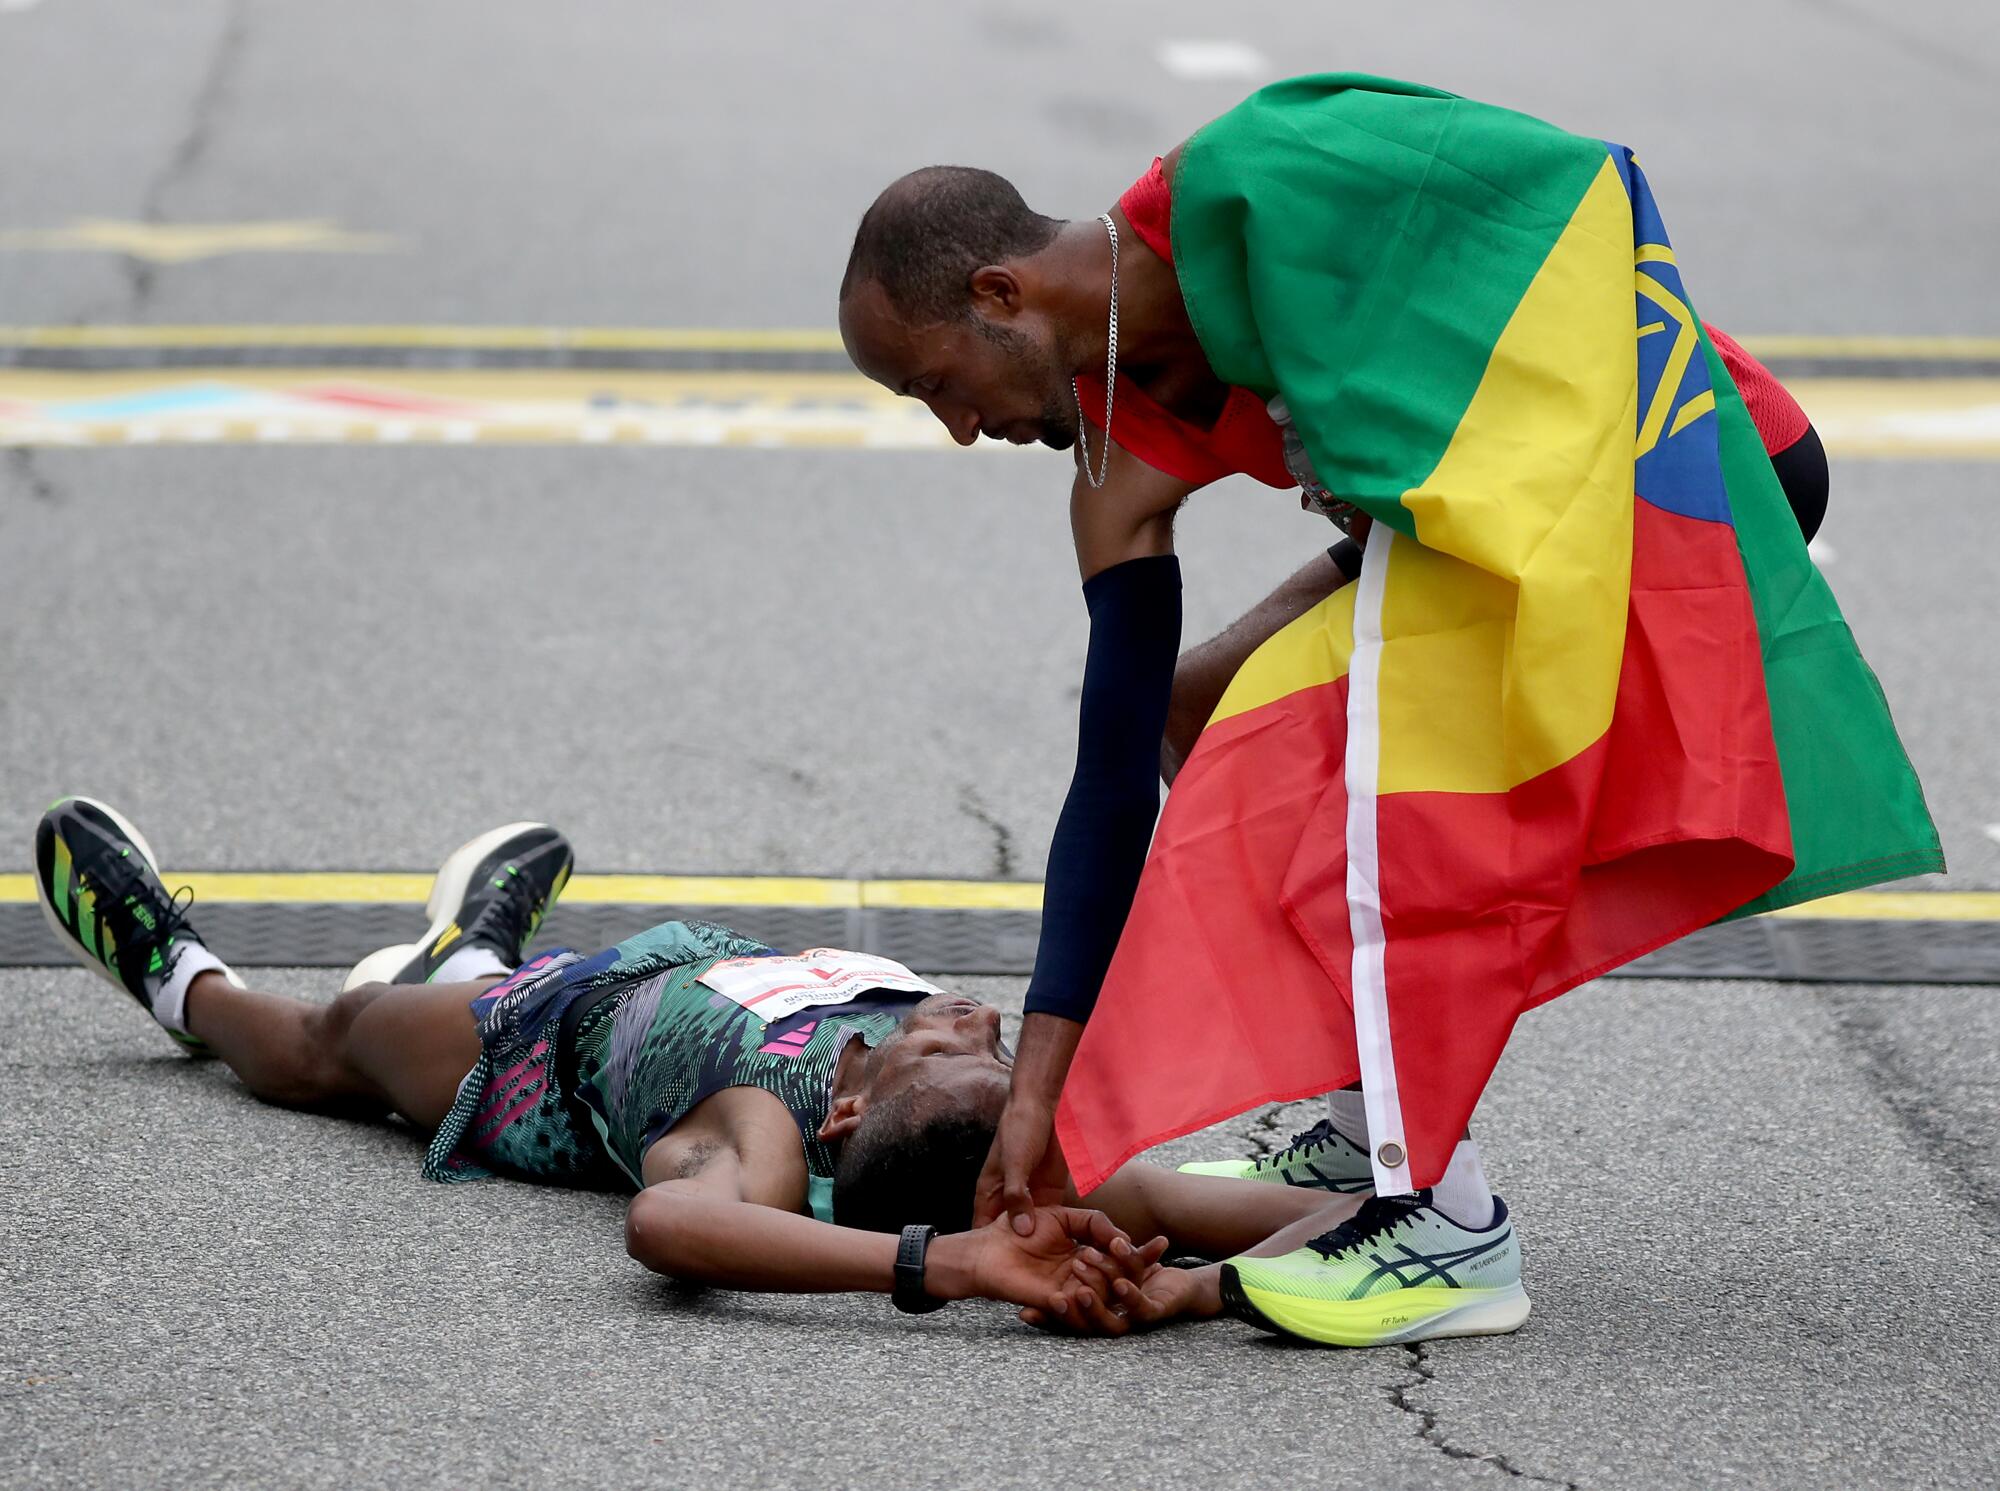 Marathon winner Jemal Yimer helps his countryman Yemane Tsegay, who collapsed after finishing second.